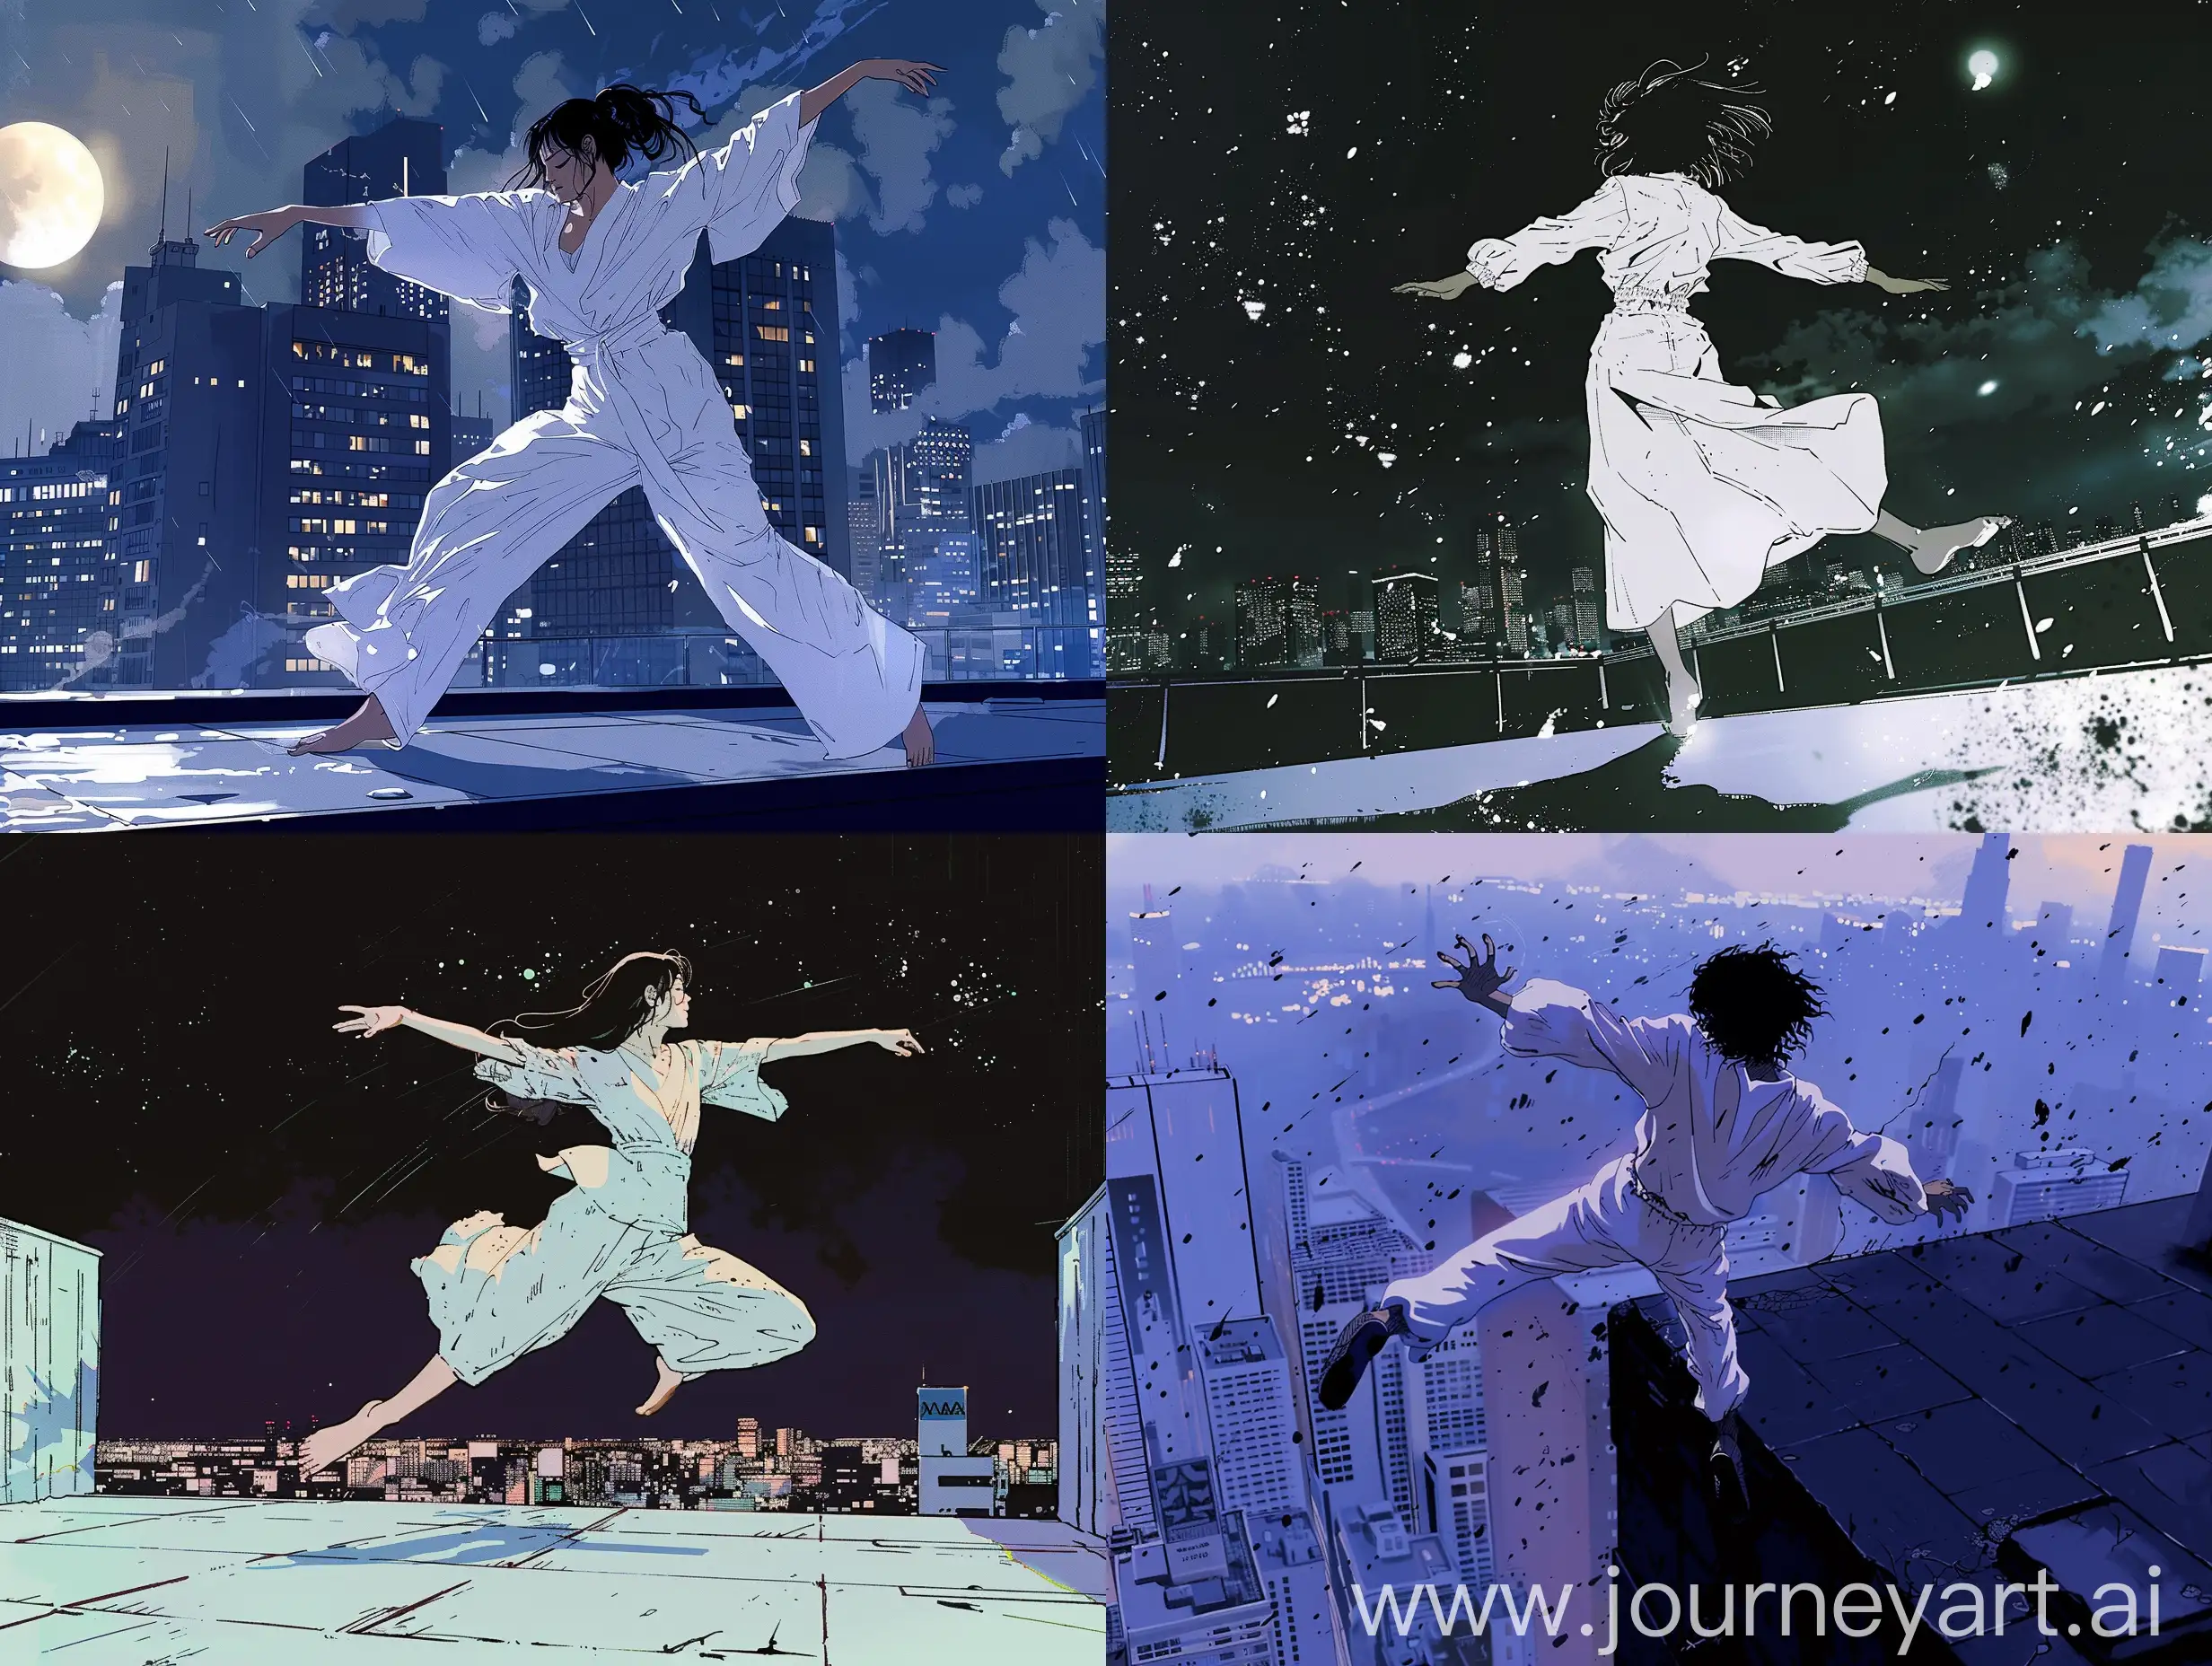 Ethereal-Tokyo-Rooftop-Dance-1980s-MangaInspired-Art-with-Junji-Ito-and-Makoto-Shinkai-Style-Elements